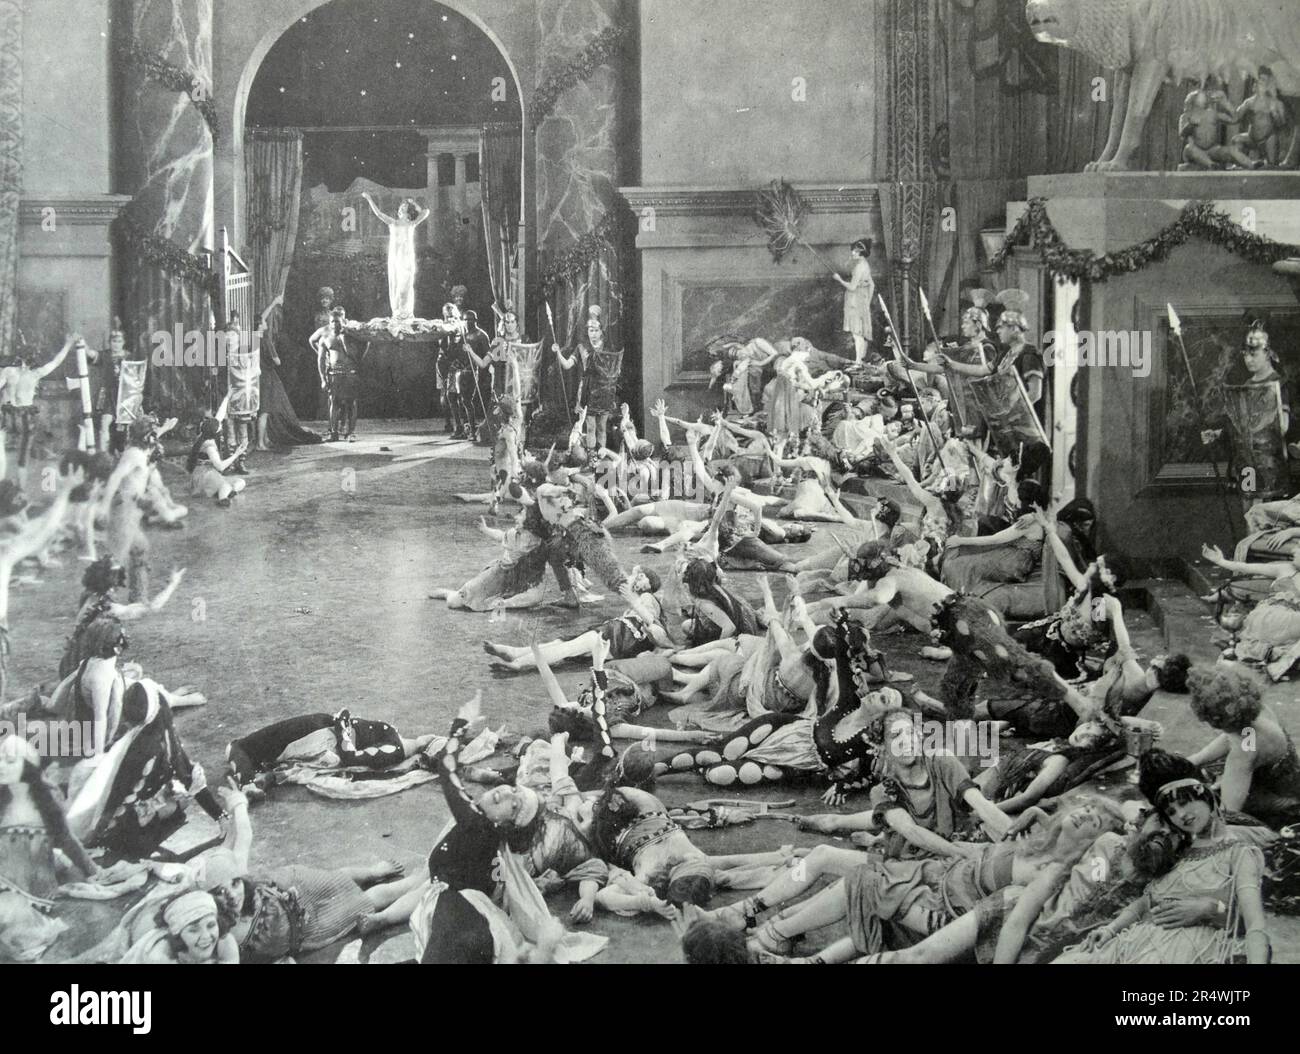 Der Fall of Rome-Sequenz aus "Totschlag" 1922, am Eingang der Venus. Stockfoto